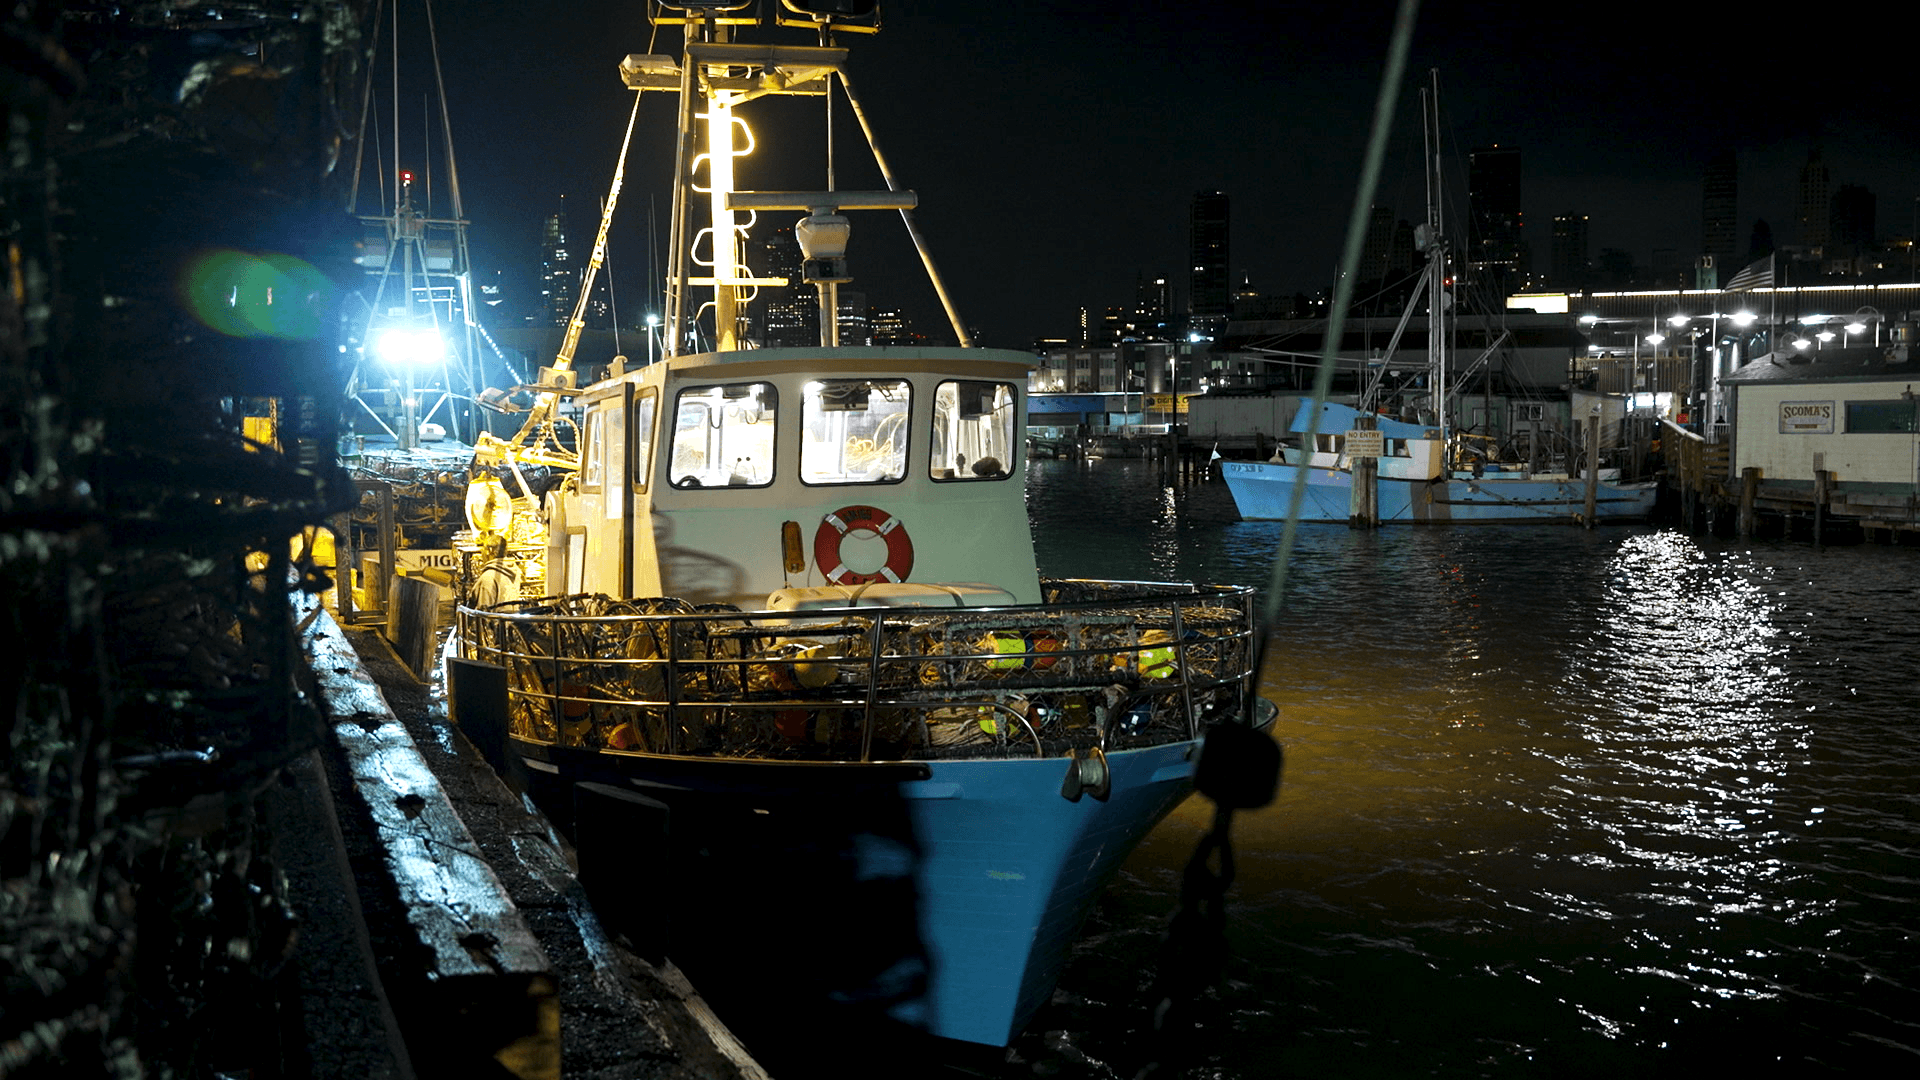 A crabbing boat sits near a harbor.